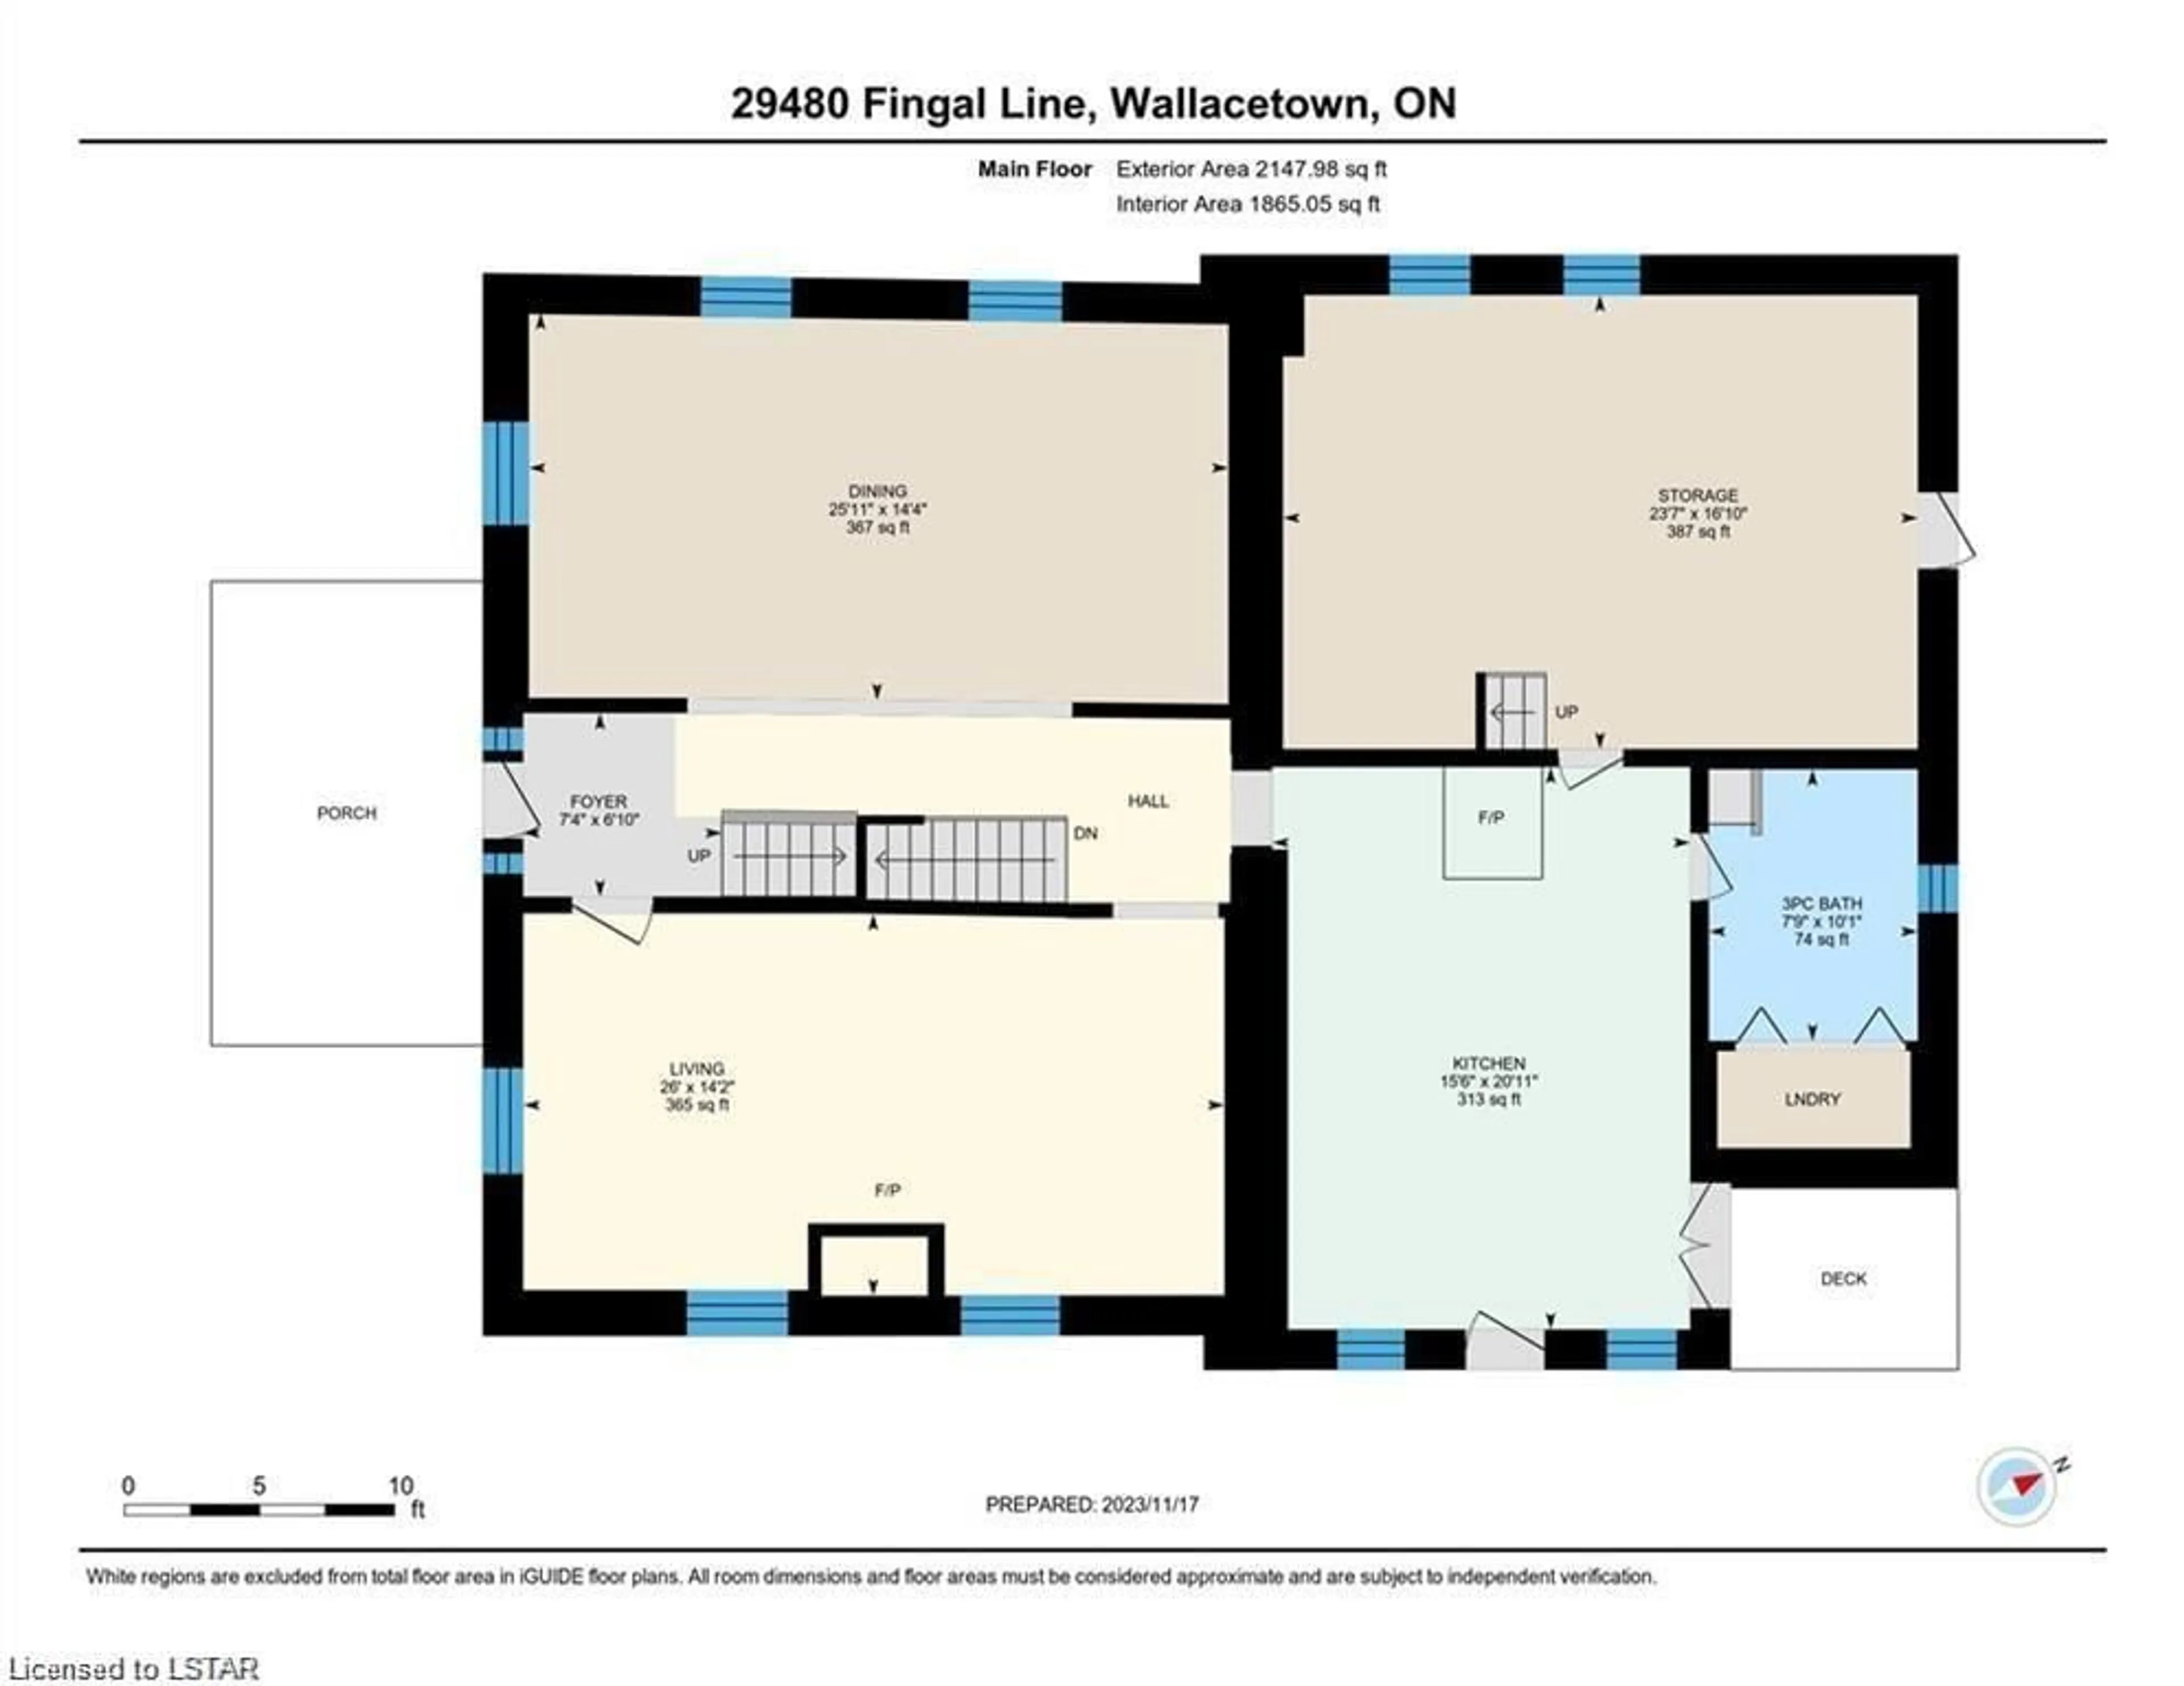 Floor plan for 29480 Fingal Line, Wallacetown Ontario N0L 2M0